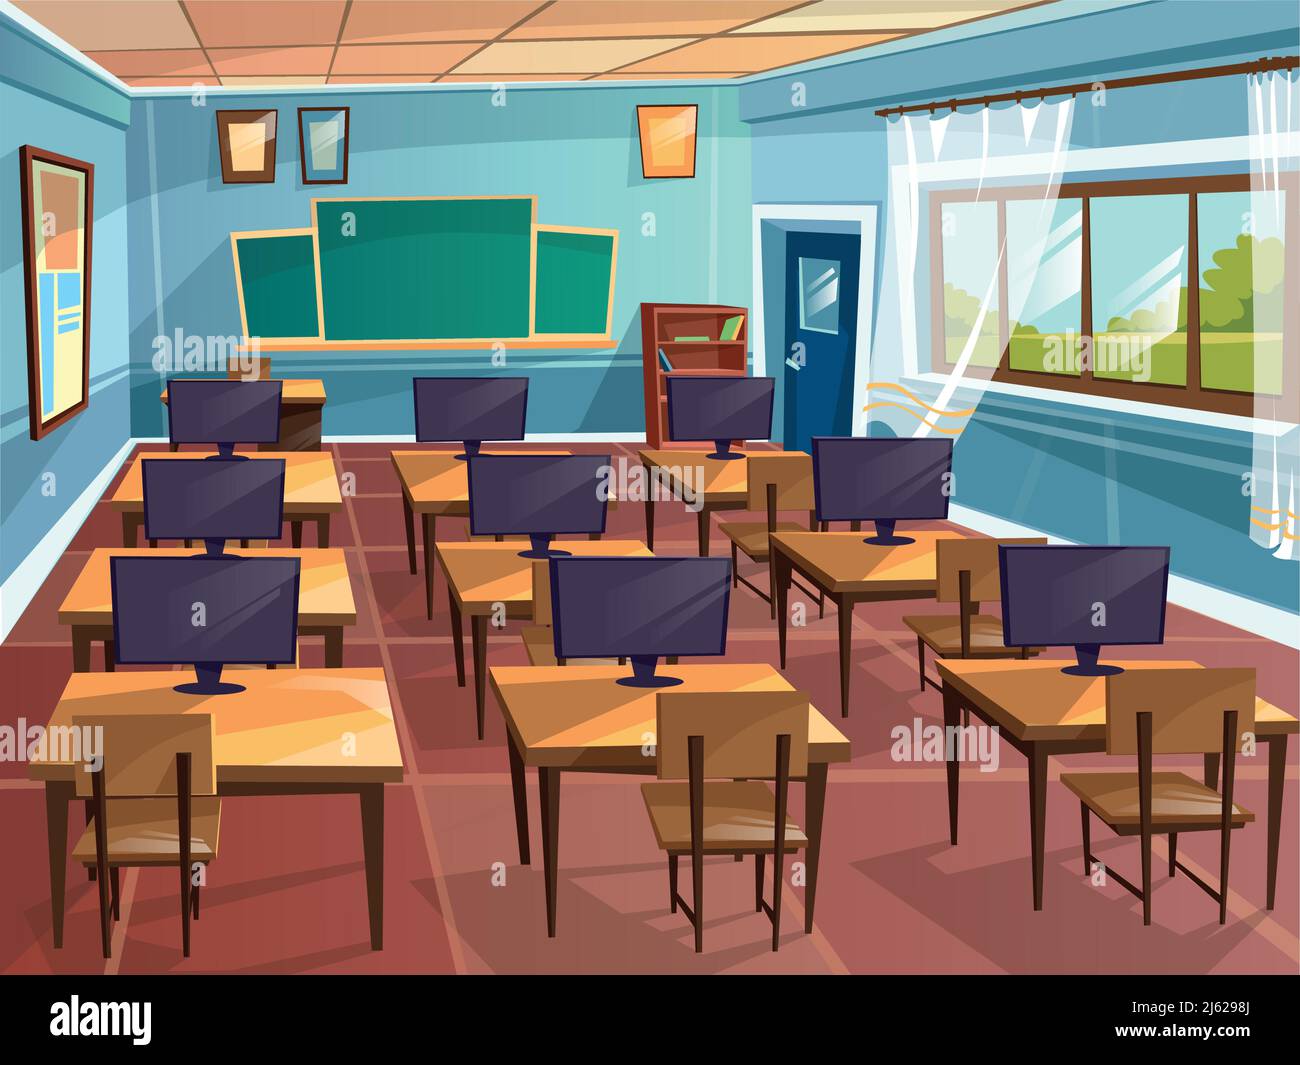 classroom cartoon background